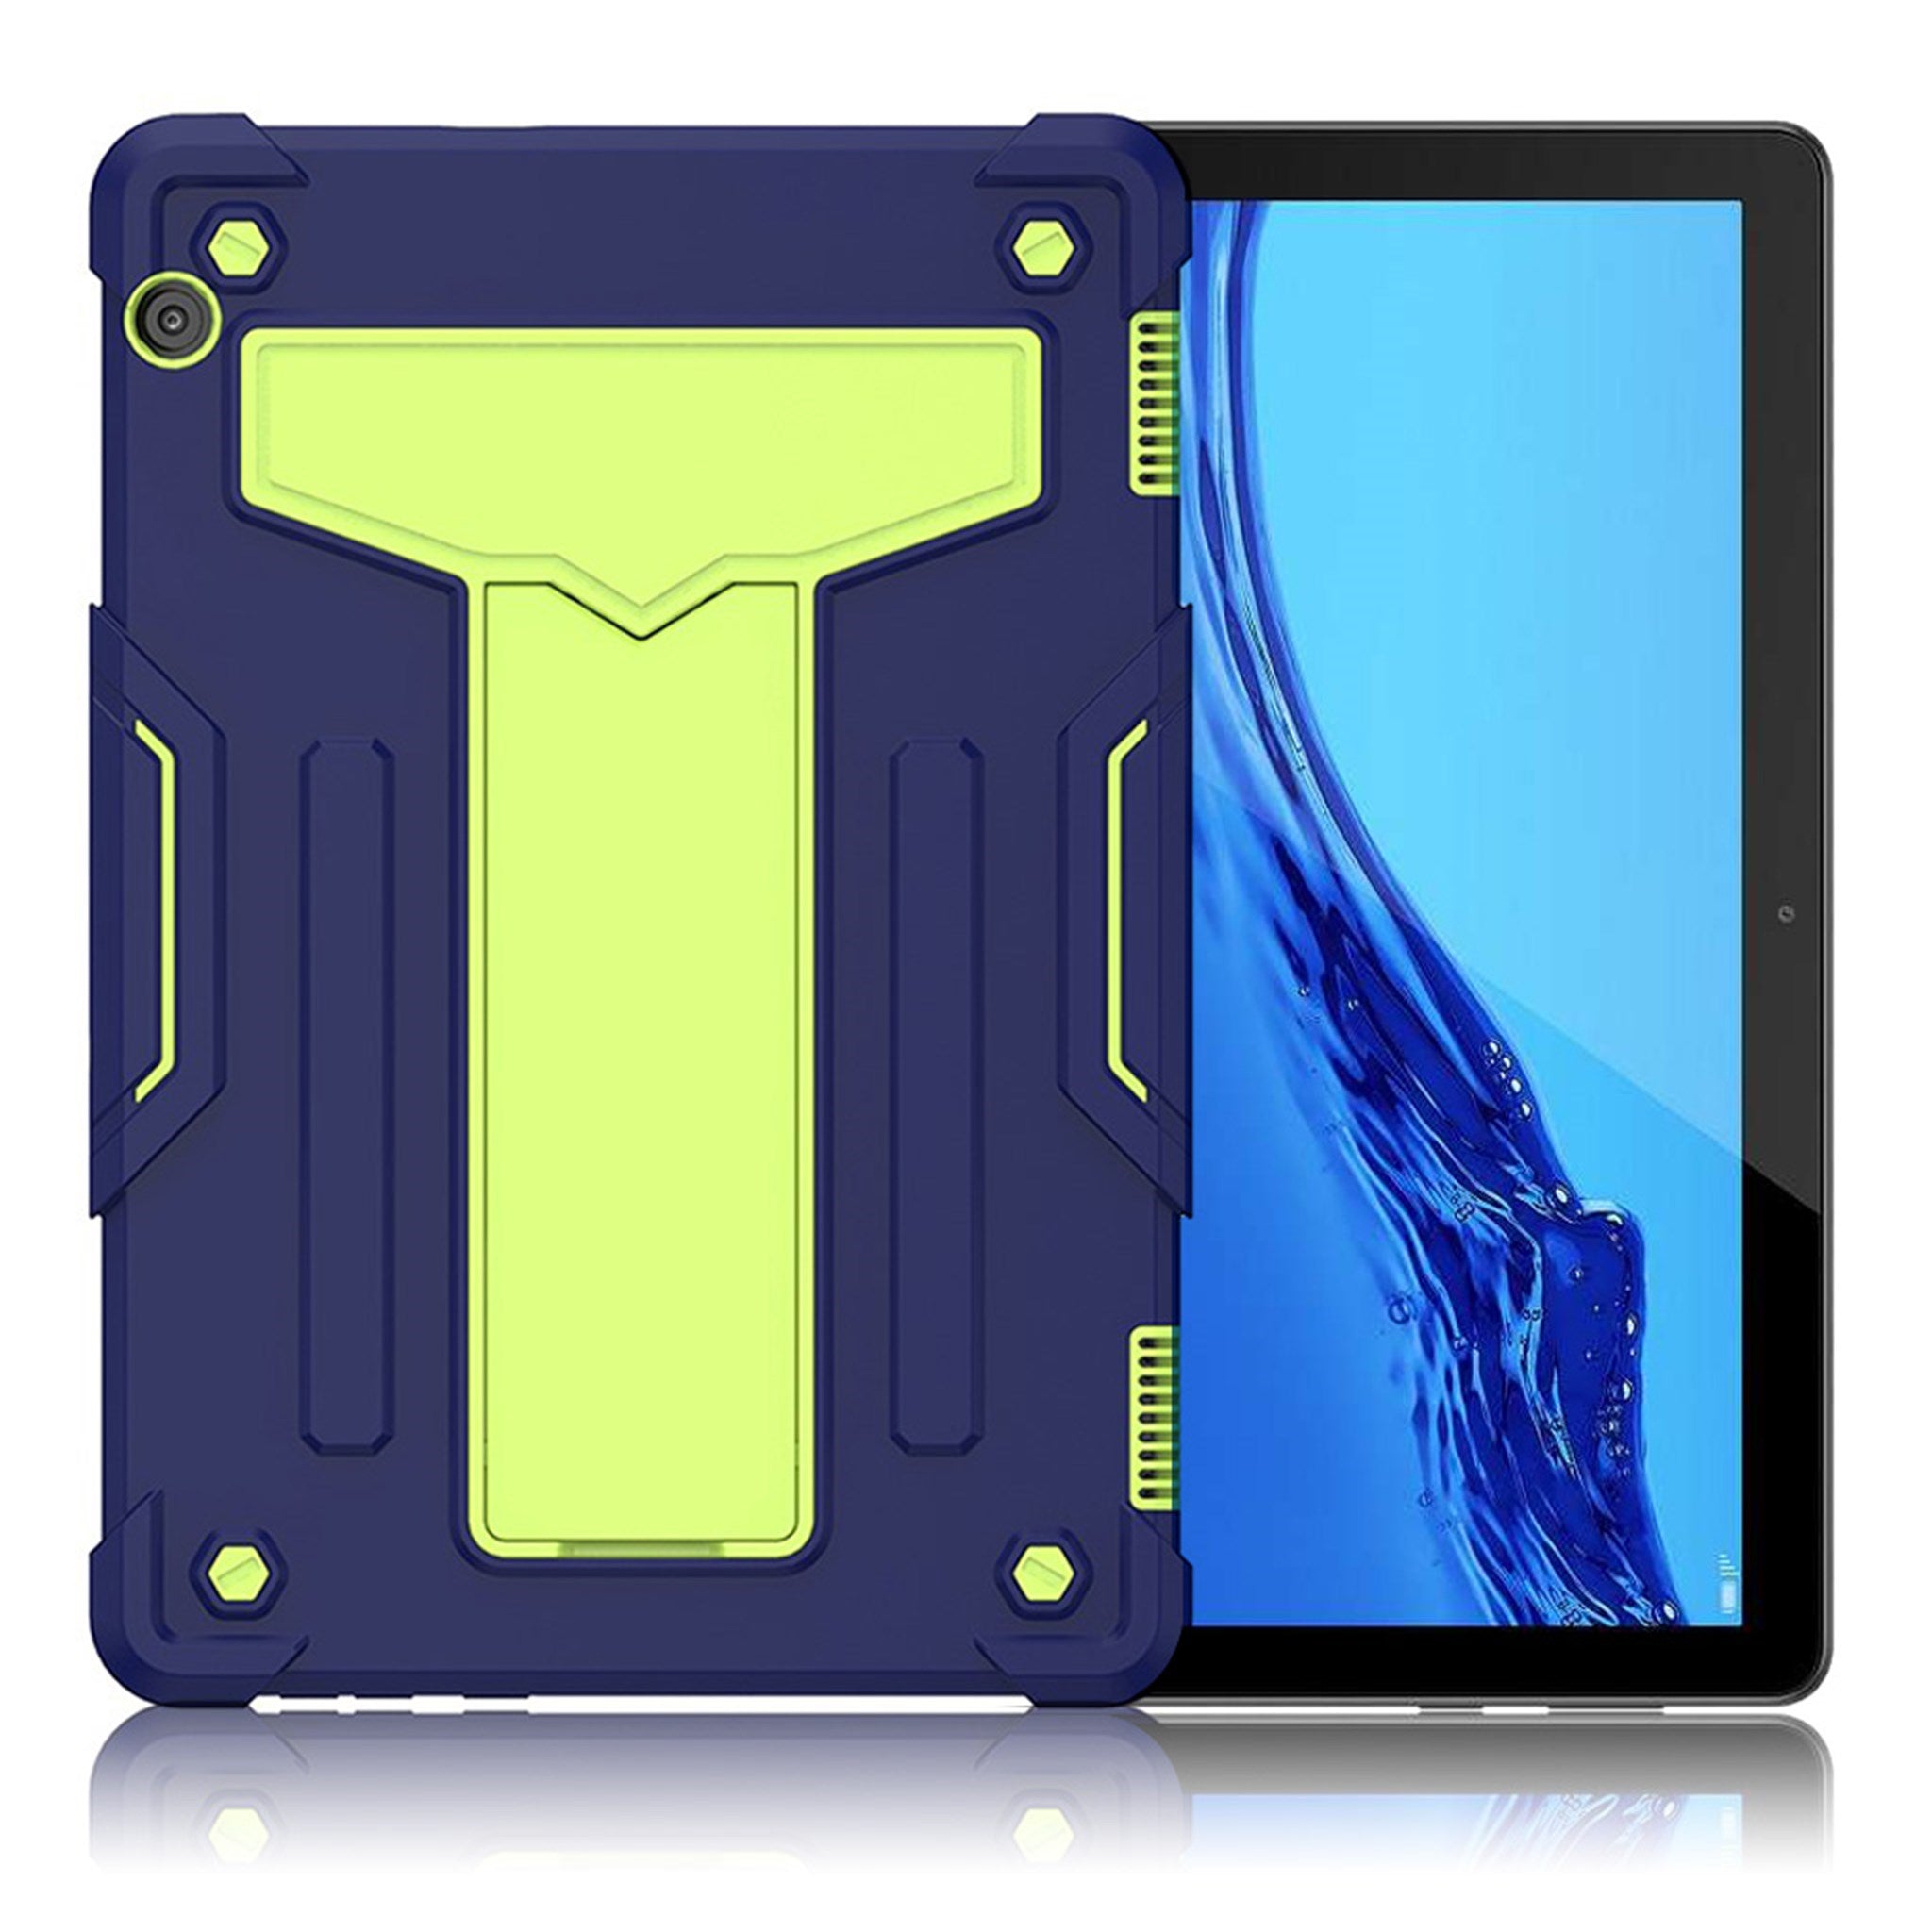 Shockproof hybrid silicone case for Huawei MediaPad T5 - Dark Blue / Green